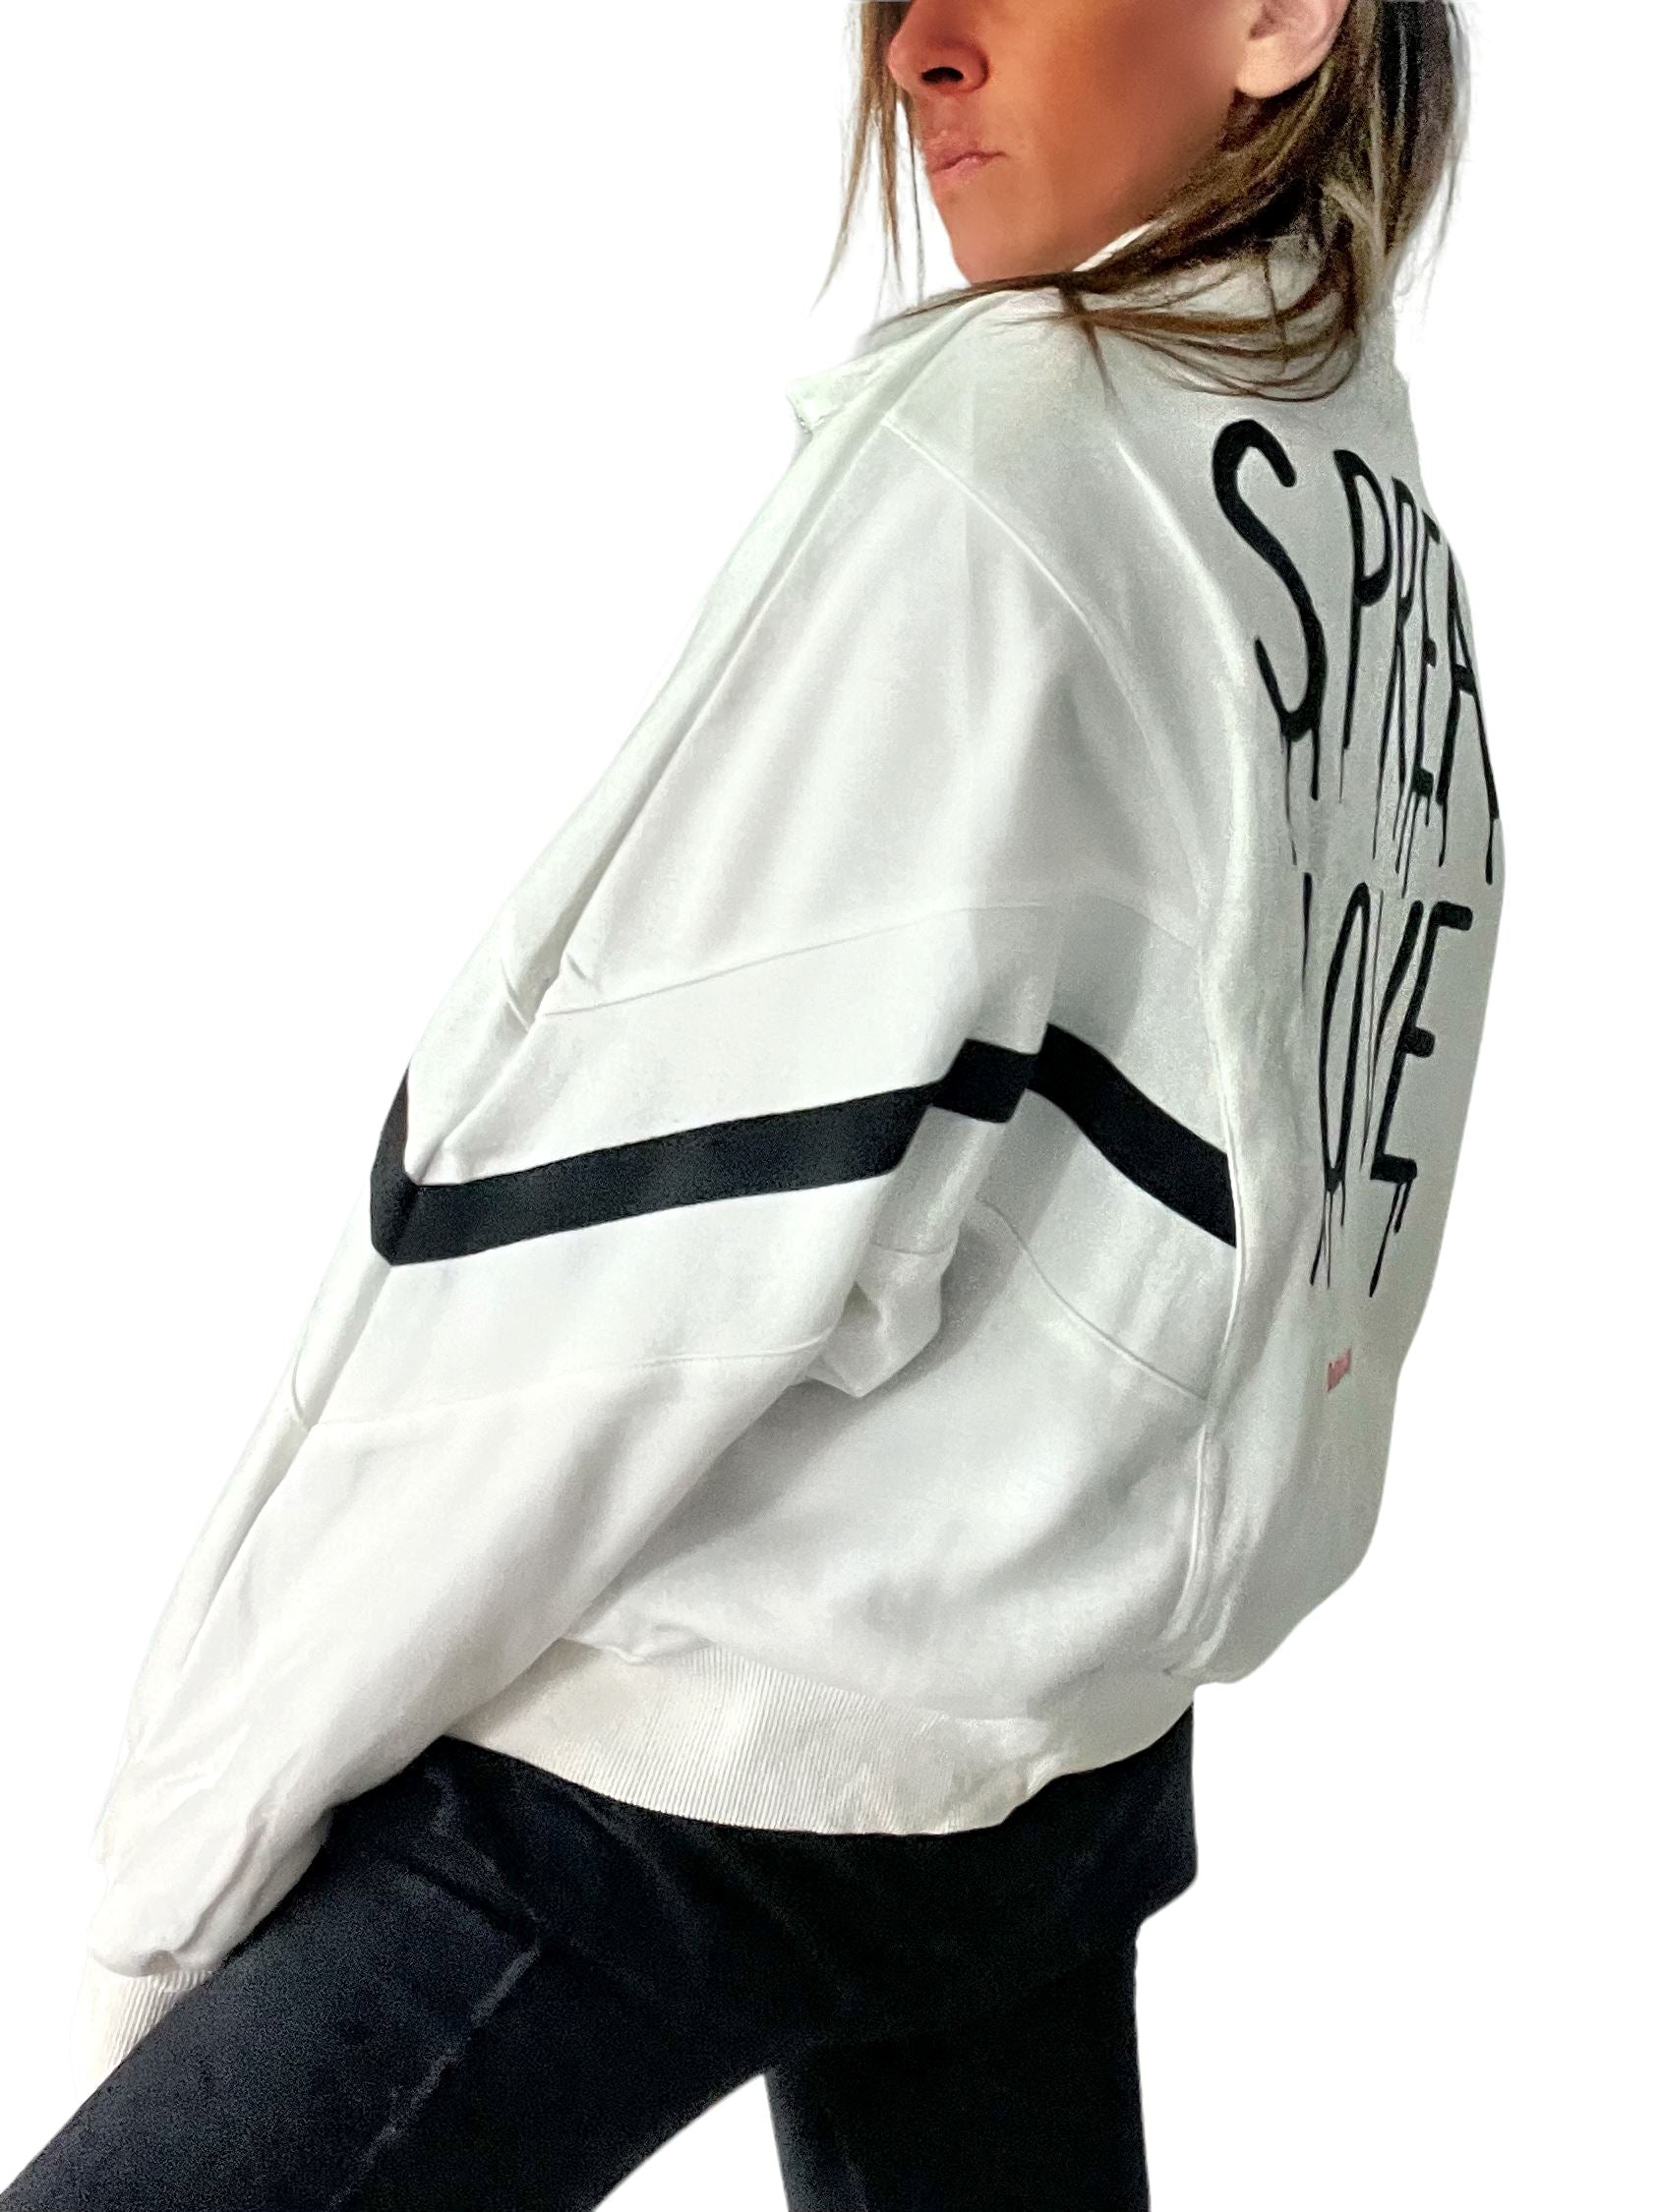 'Spread Love' Painted Sweat Jacket